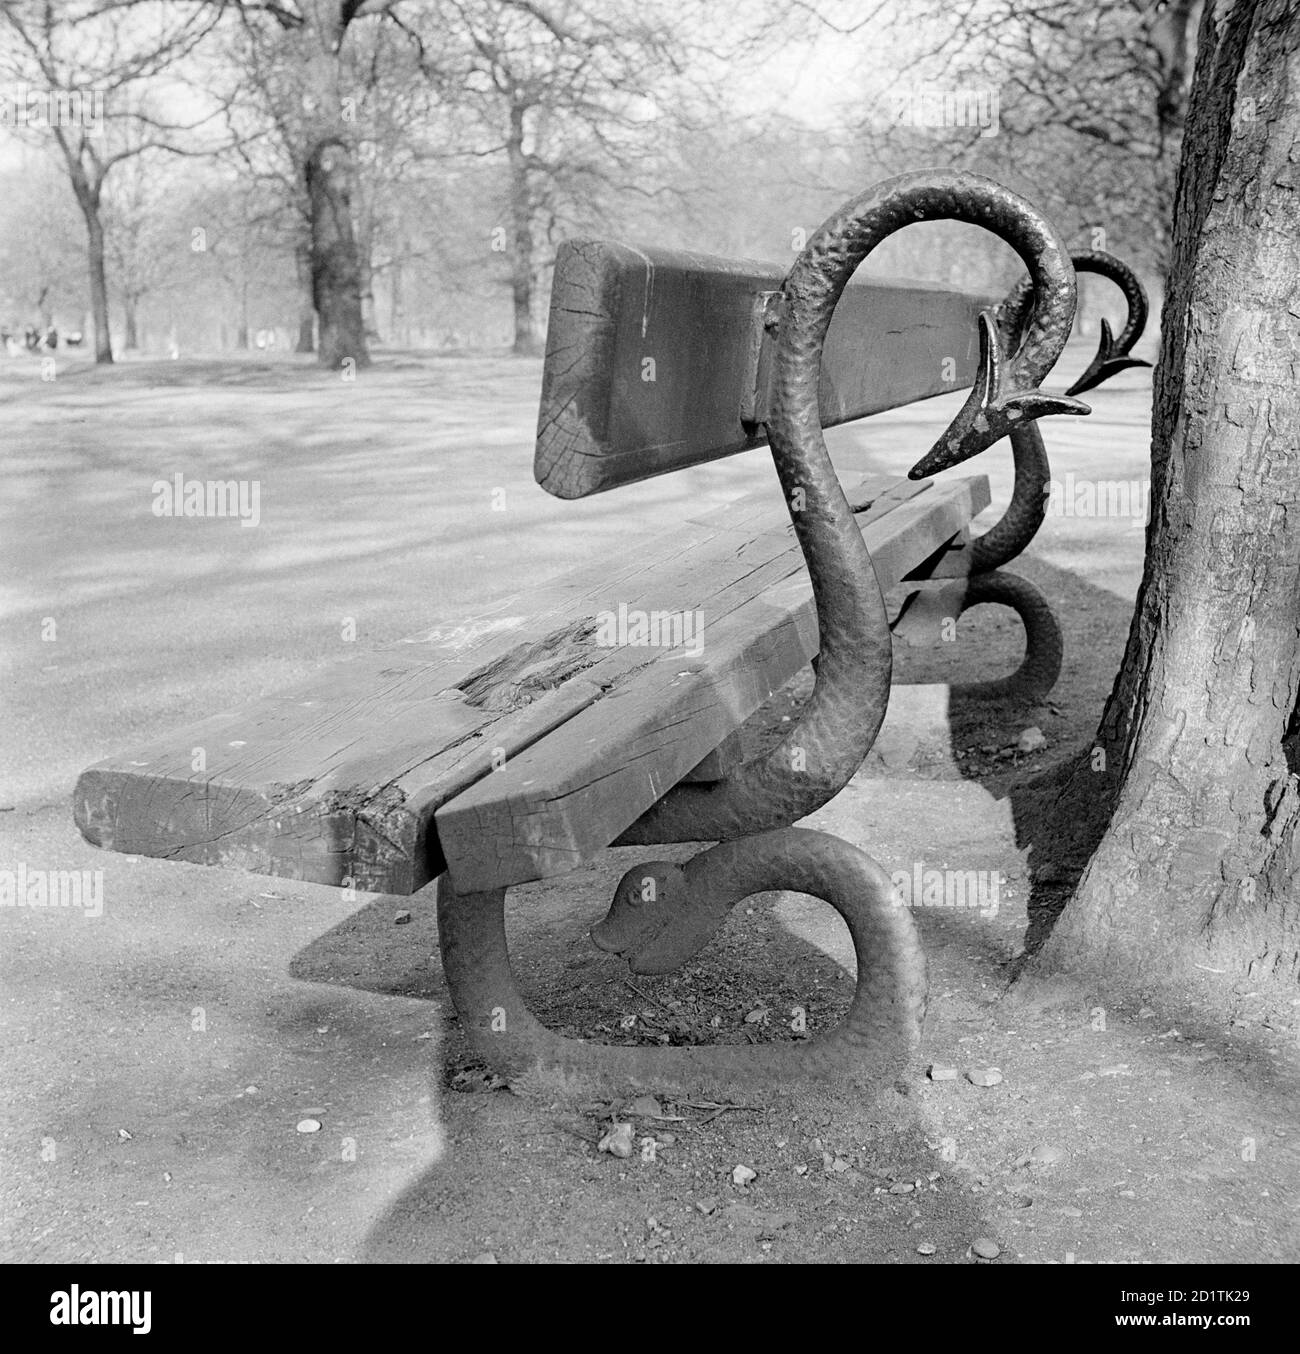 KENSINGTON GARDENS, Westminster, London. Detail of an ornamental serpentiform bench in Kensington Gardens. Photographed by Eric de Mare. Date range: 1945-1980. Stock Photo